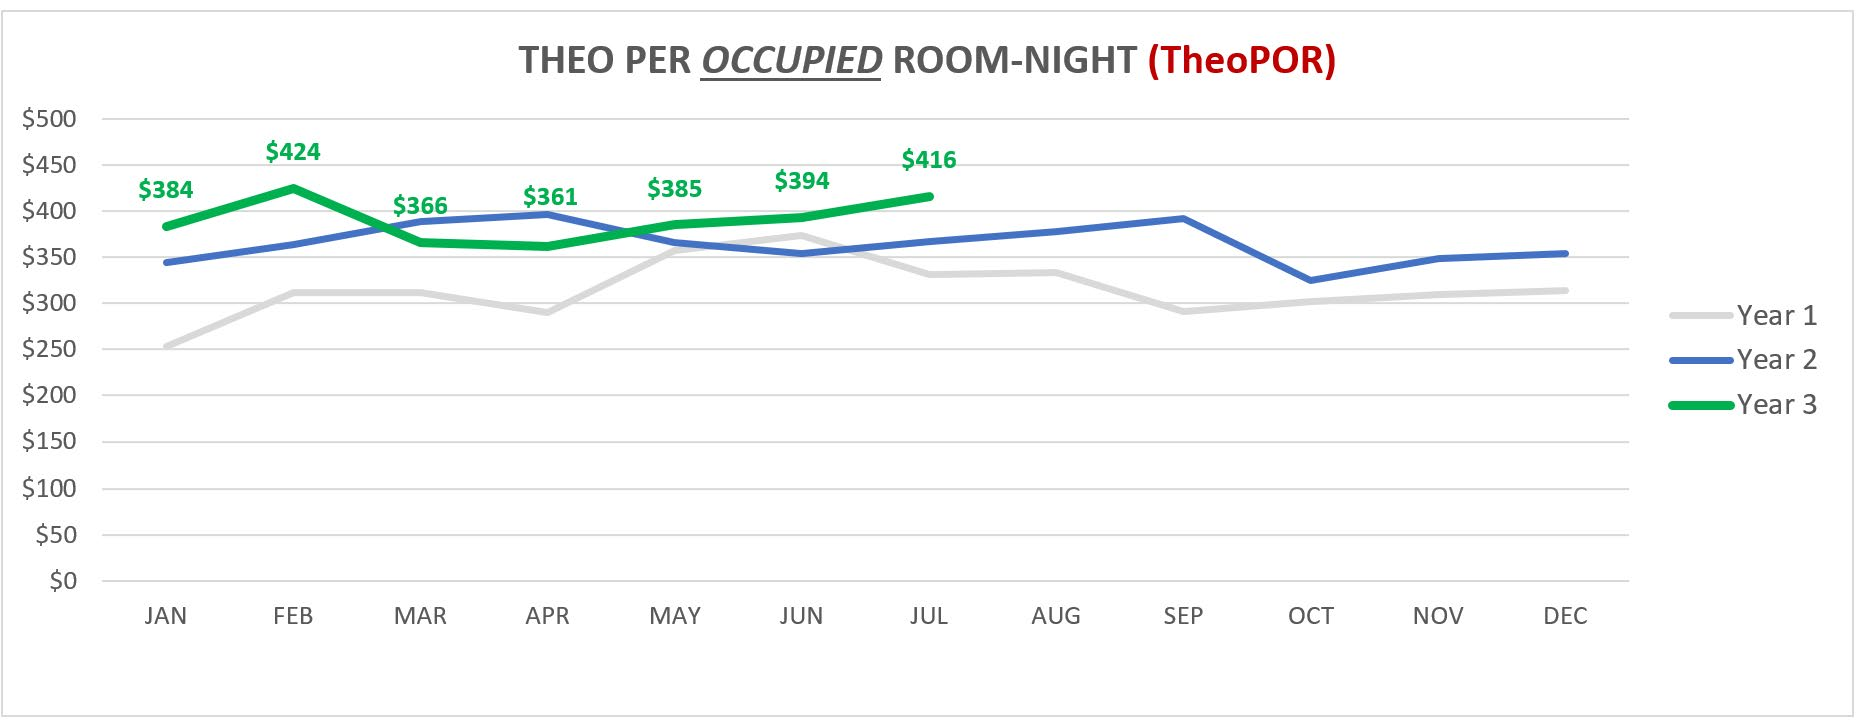 Theo per occupied room night